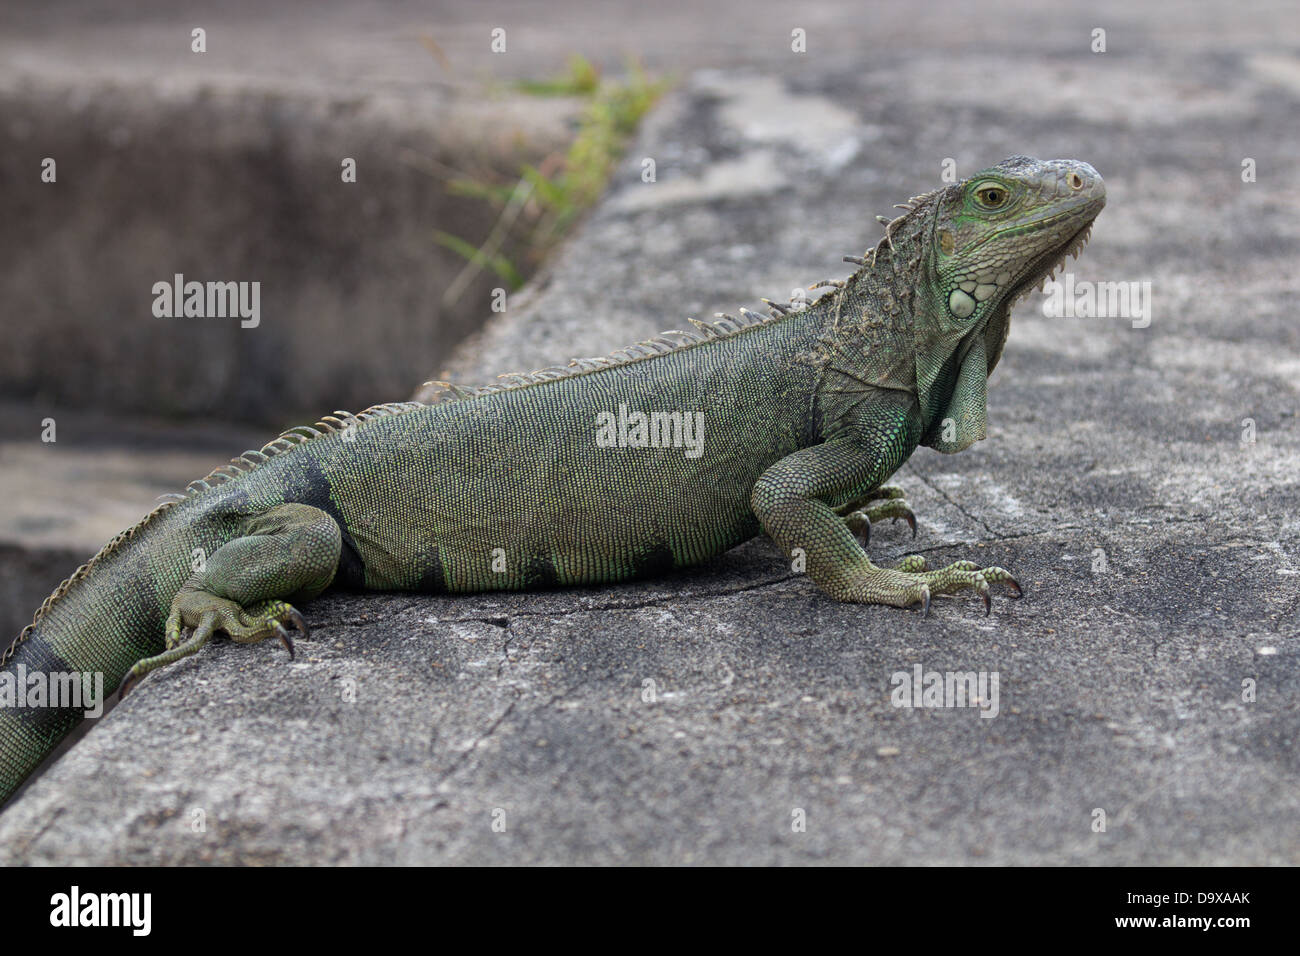 Iguana green reptile Stock Photo